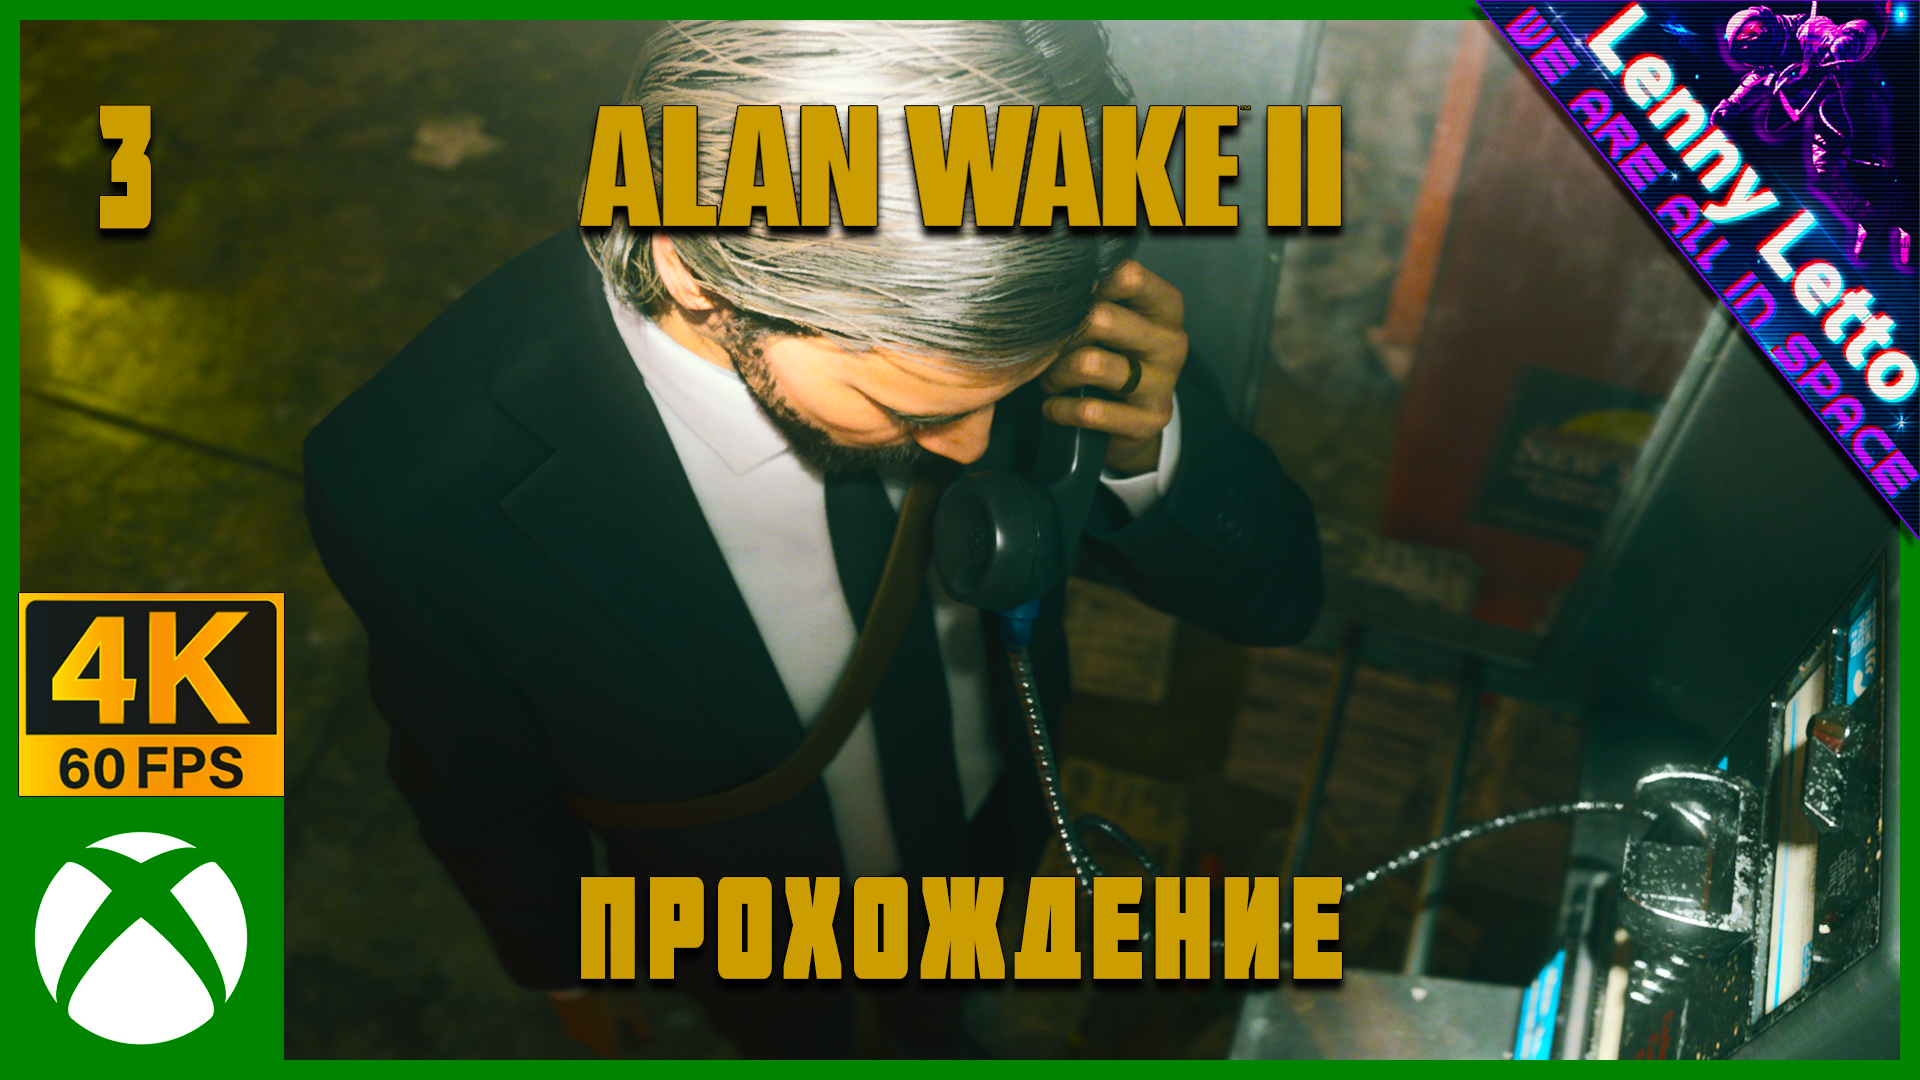 Alan Wake 2 | Прохождение. Часть 3 | XBSX 4K 60FPS